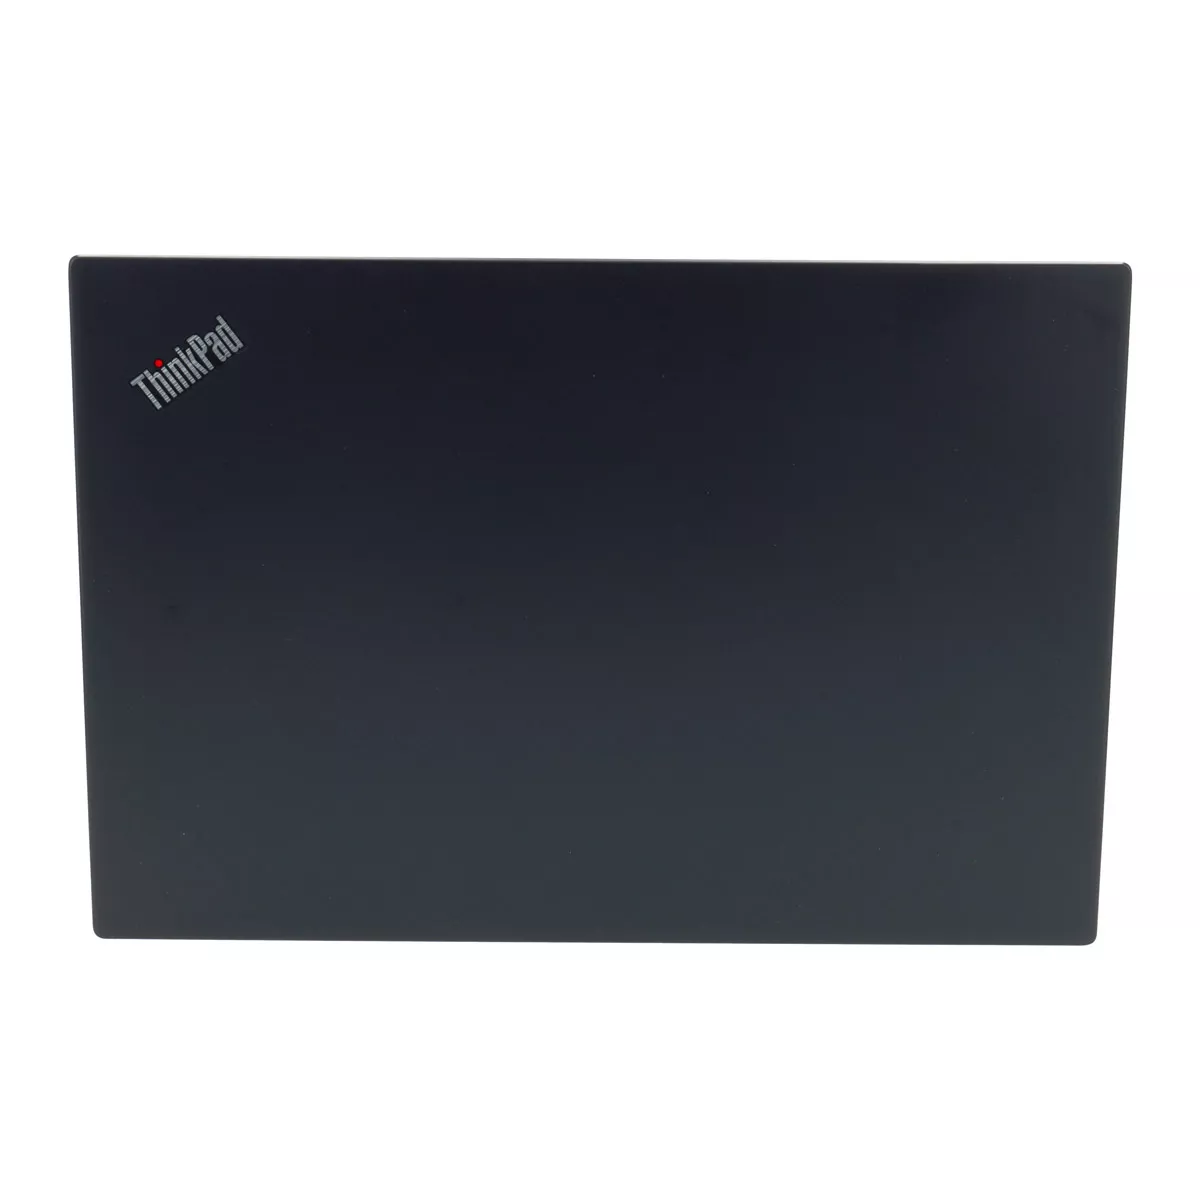 Lenovo ThinkPad T495 AMD Ryzen 5 Pro 3500U Full-HD Touch 500 GB M.2 nVME SSD Webcam B